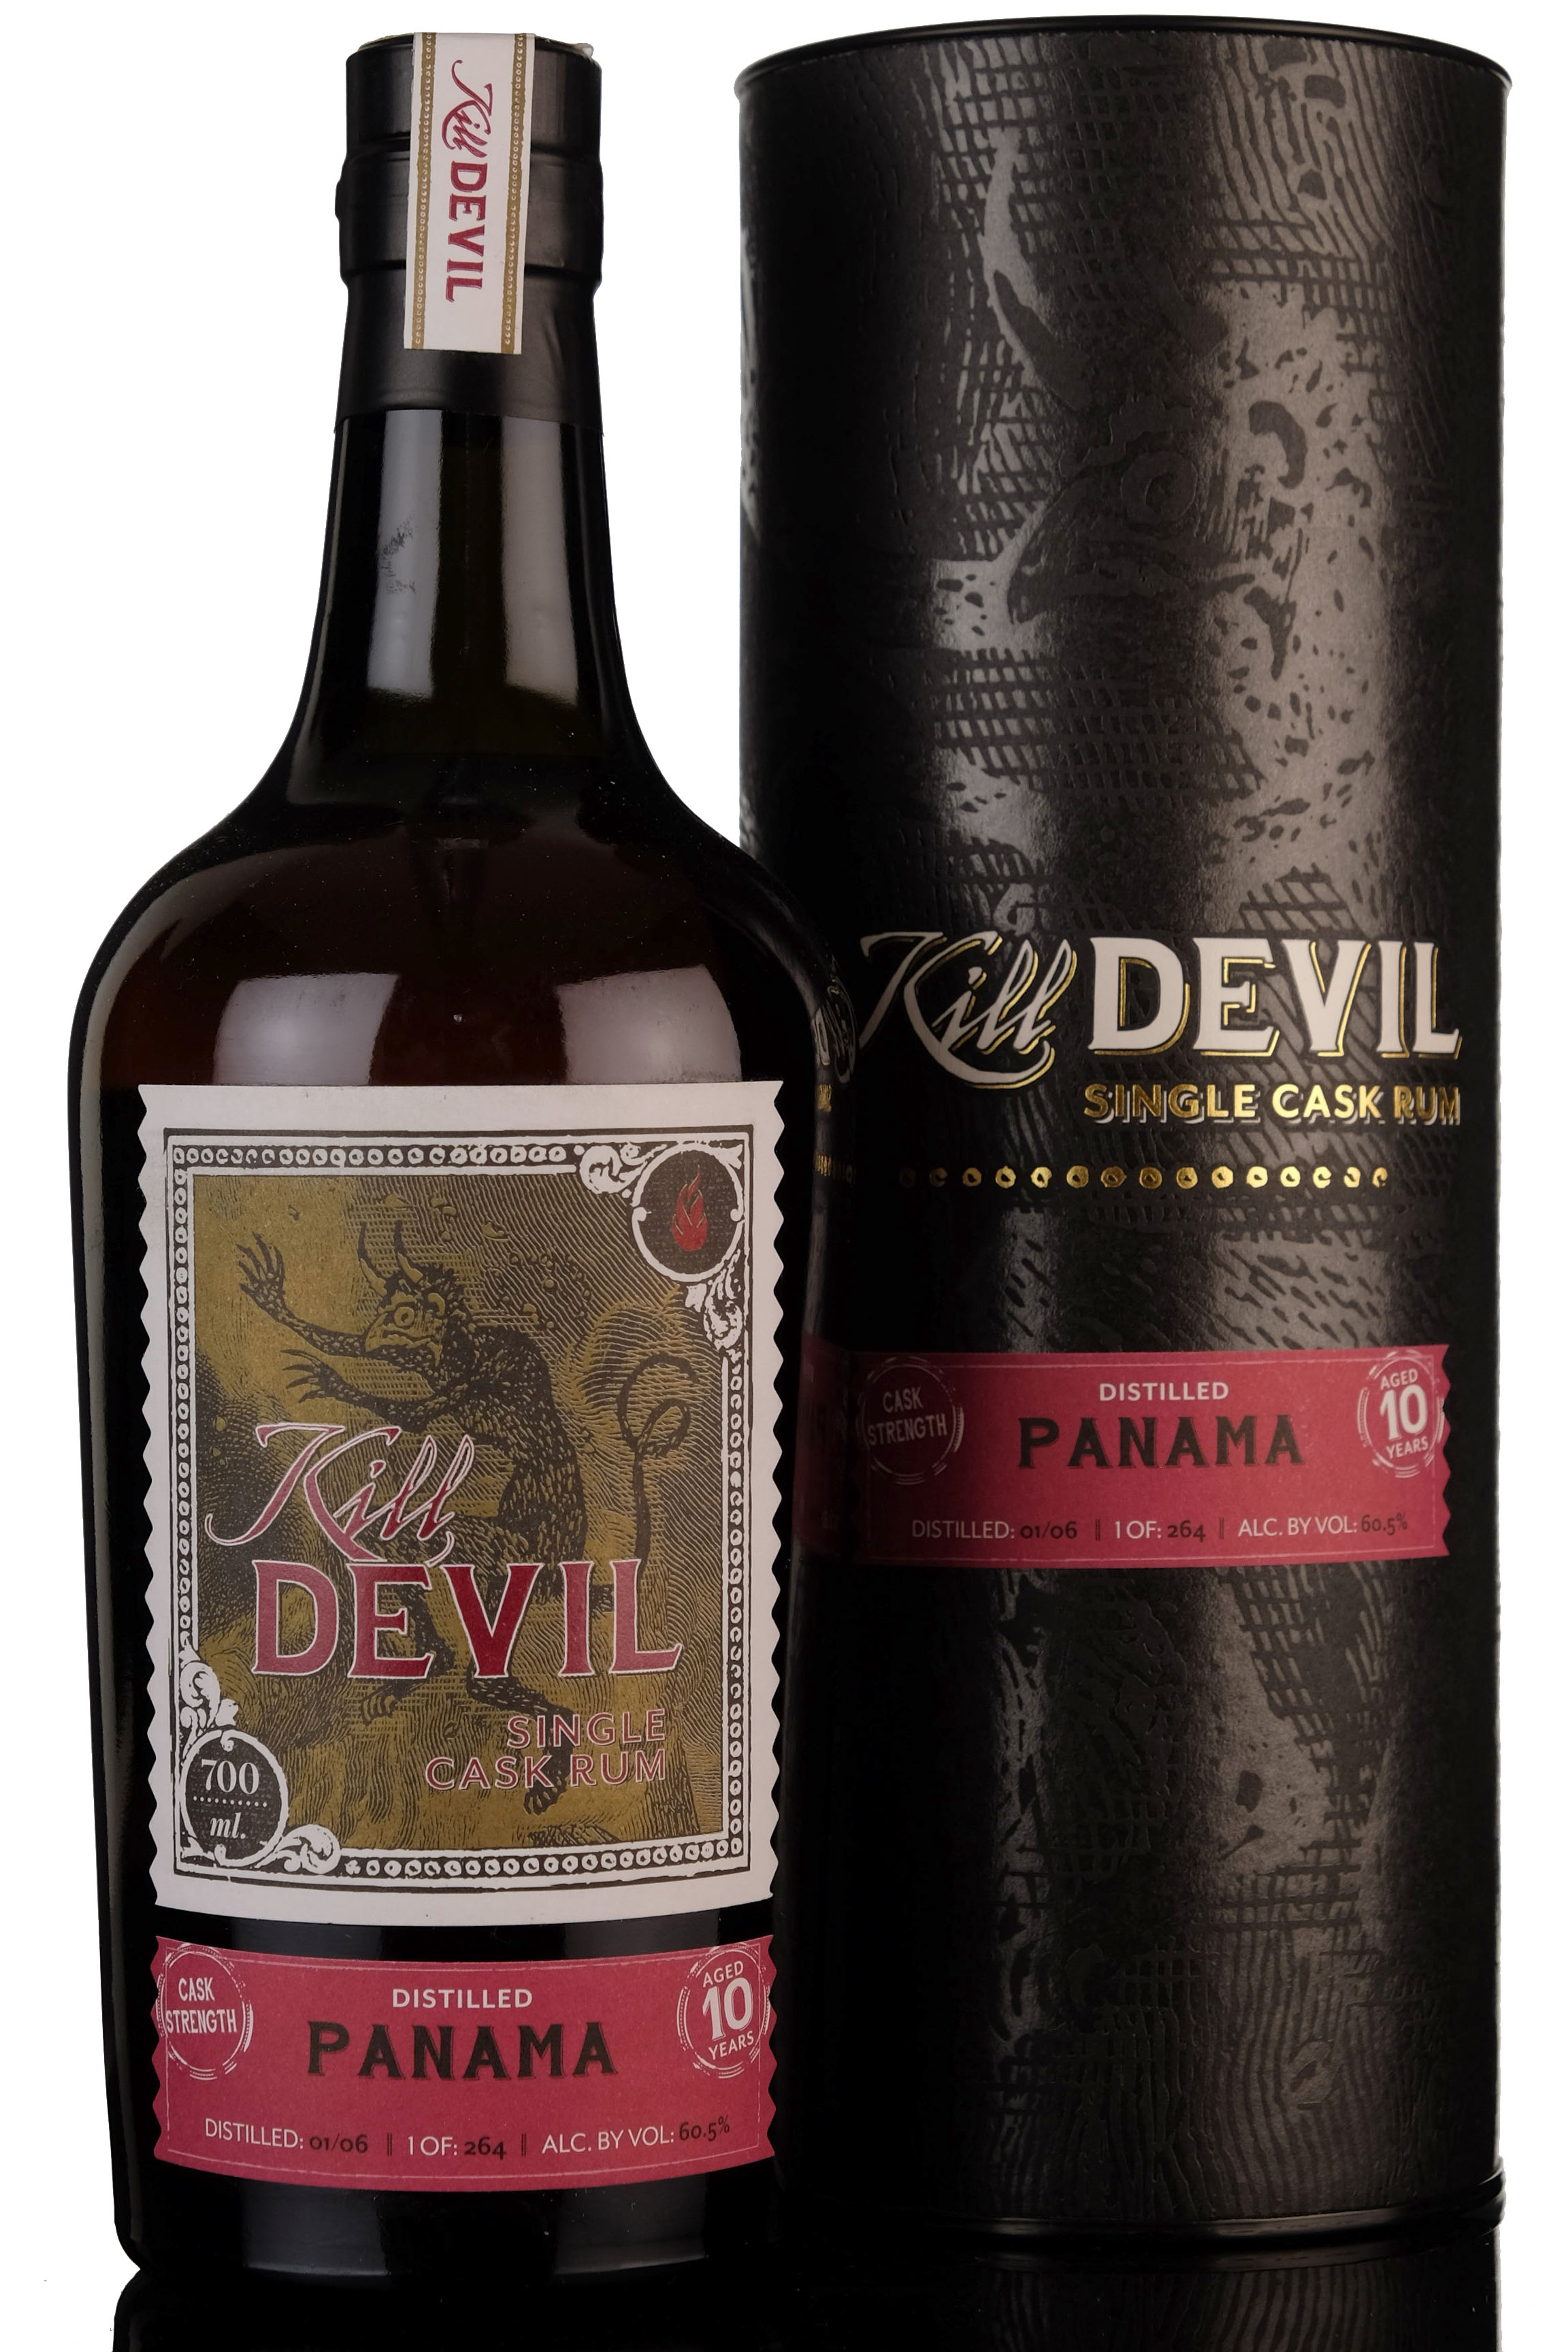 Panama 2006 - 10 Year Old - Kill Devil Single Cask Rum